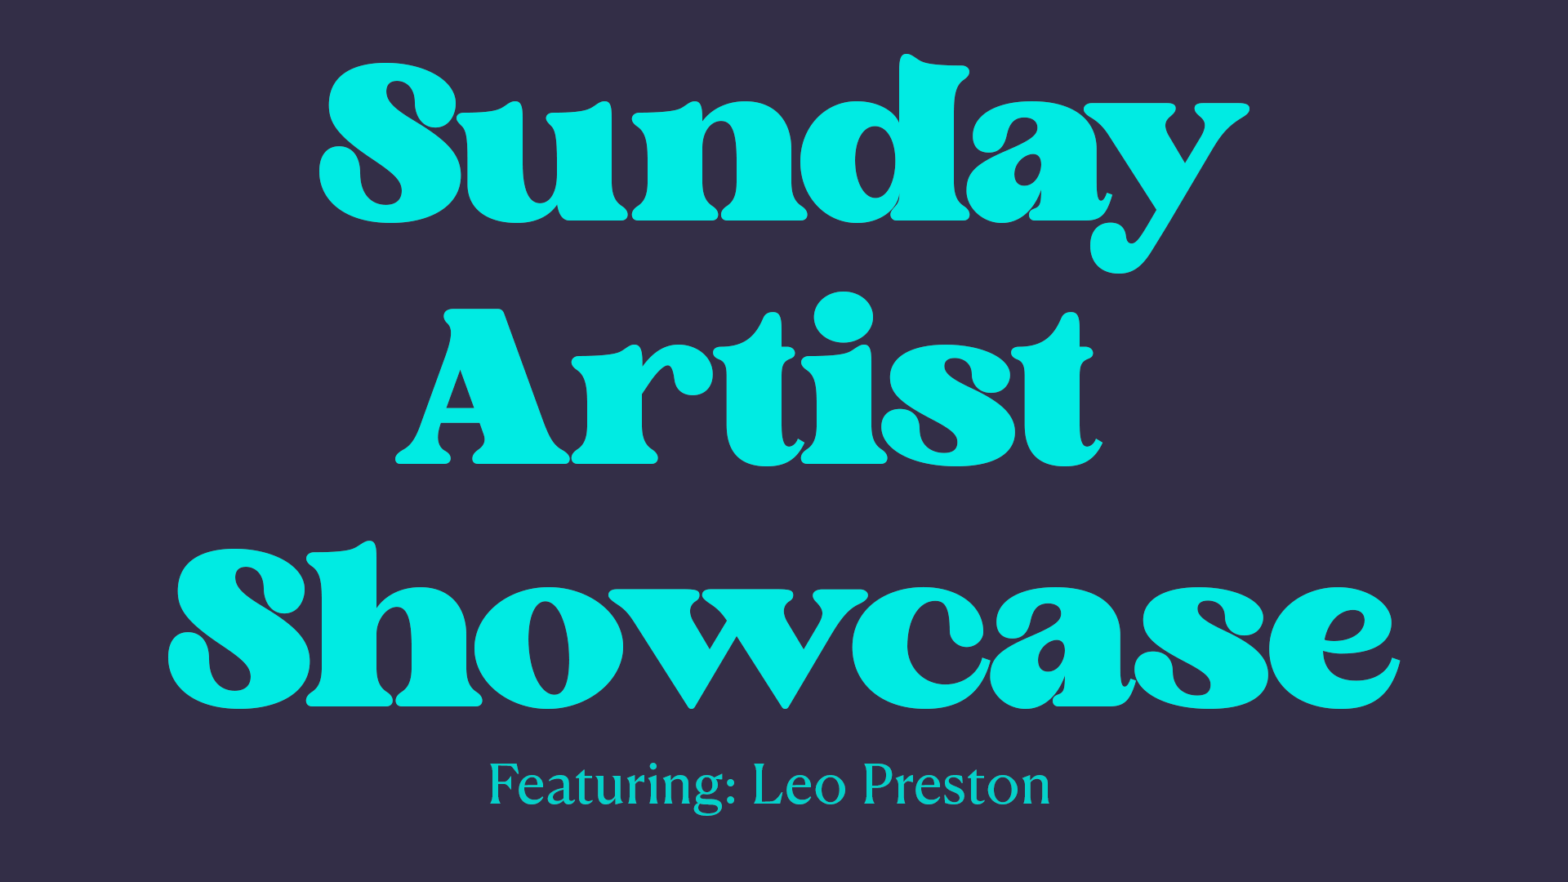 Teal text on a purple background reading: “Sunday Artist Showcase Featuring Leo Preston.”